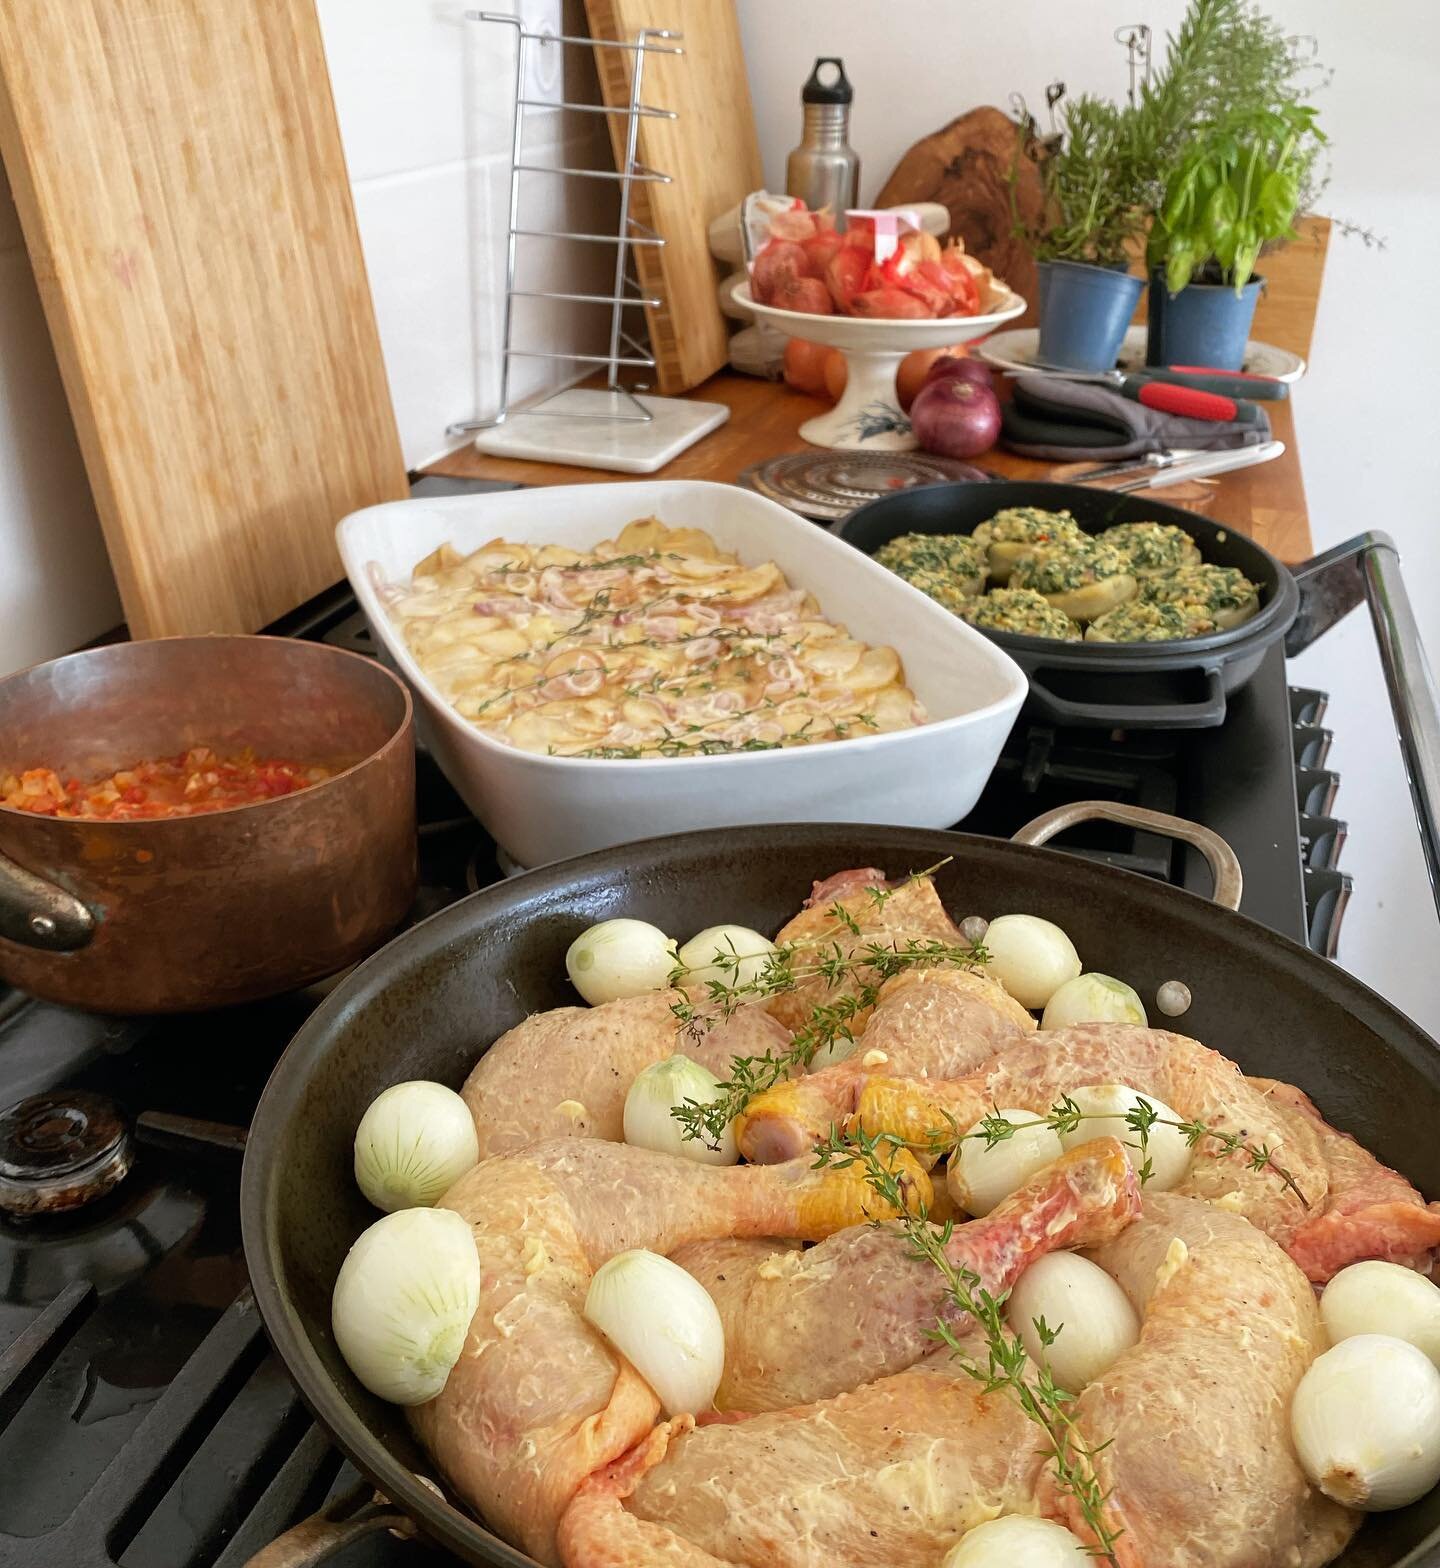 Dinner prep is done ! 
#provencedinner #dinnerparty #cookinginprovence #happydays #myprovencekitchen